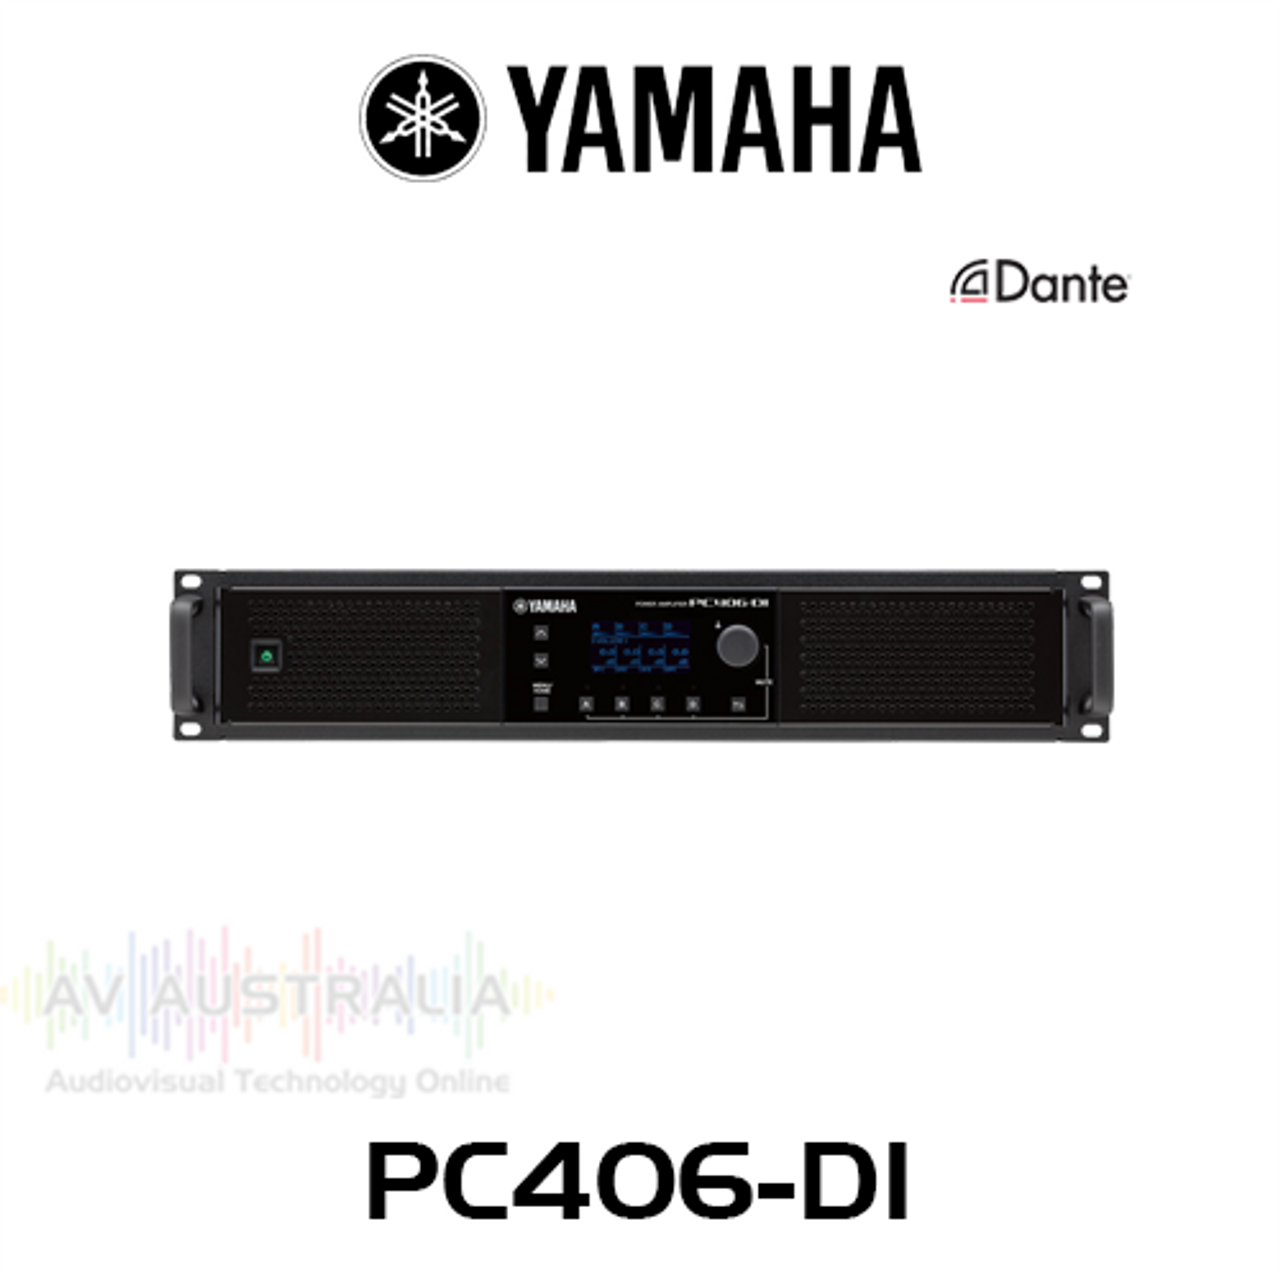 Yamaha PC406-DI 4 x 600W @ 8 ohm 70/100V Power Amplifier